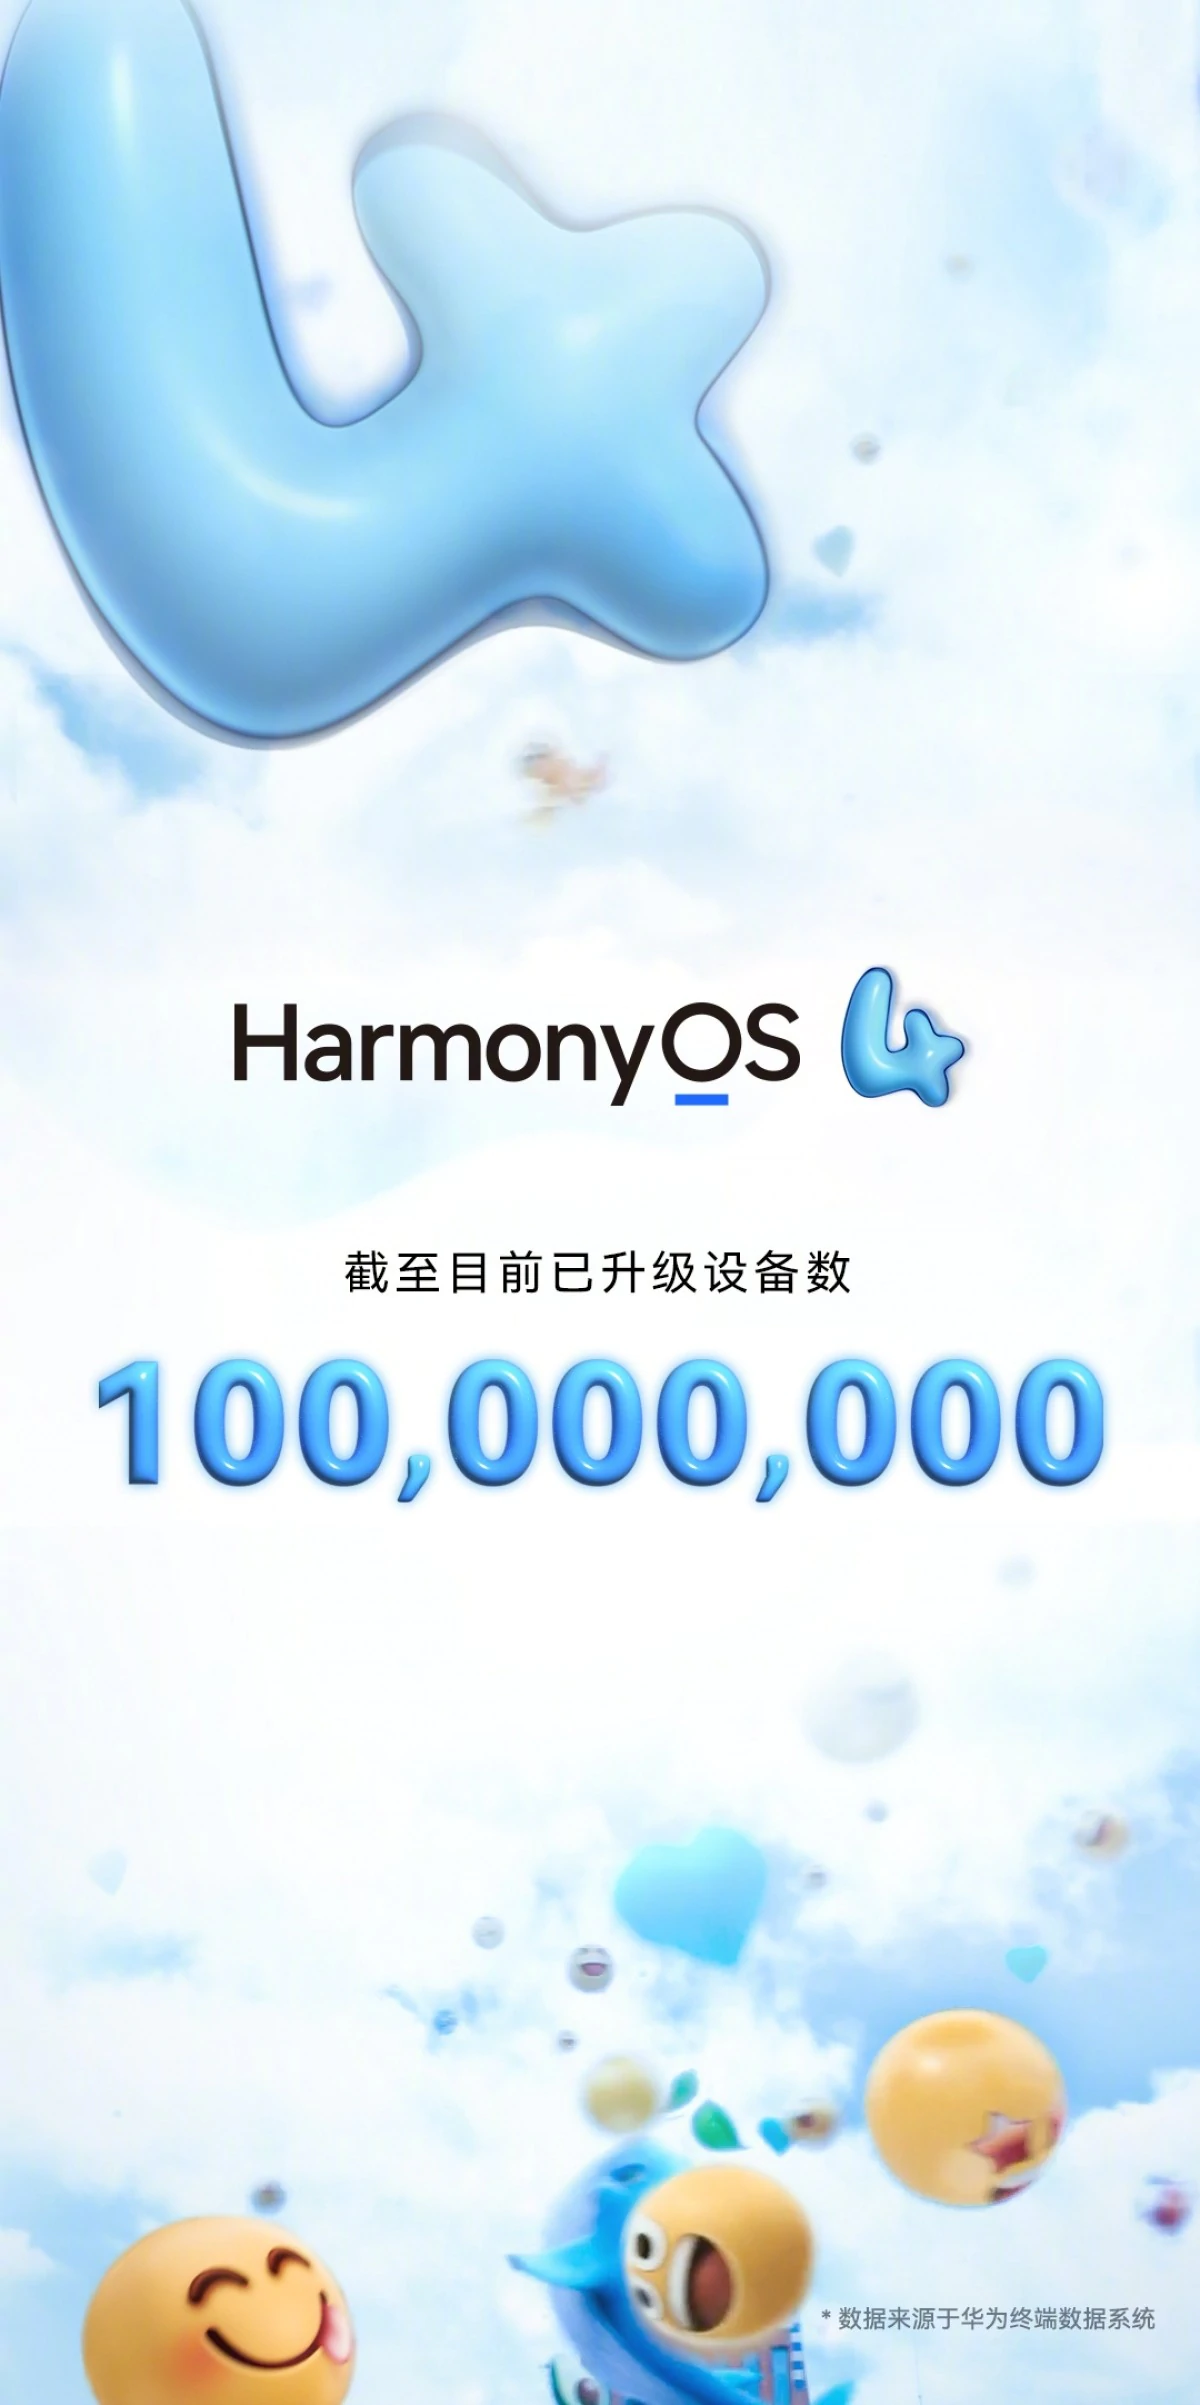 gsmarena 001 | HarmonyOS | Huawei ประกาศ HarmonyOS 4 มีผู้ใช้งานเกิน 100 ล้านอุปกรณ์แล้ว